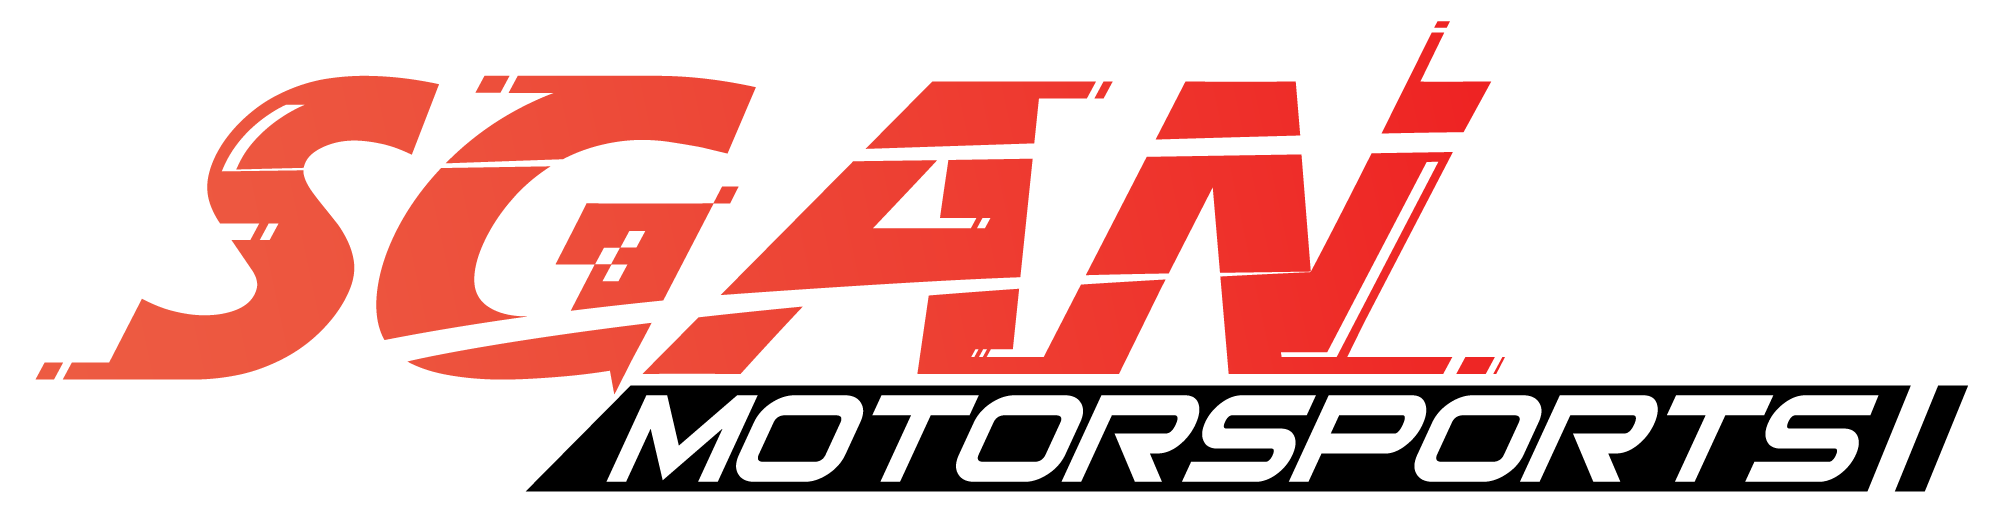 File:Sgan motorsports 2021.png